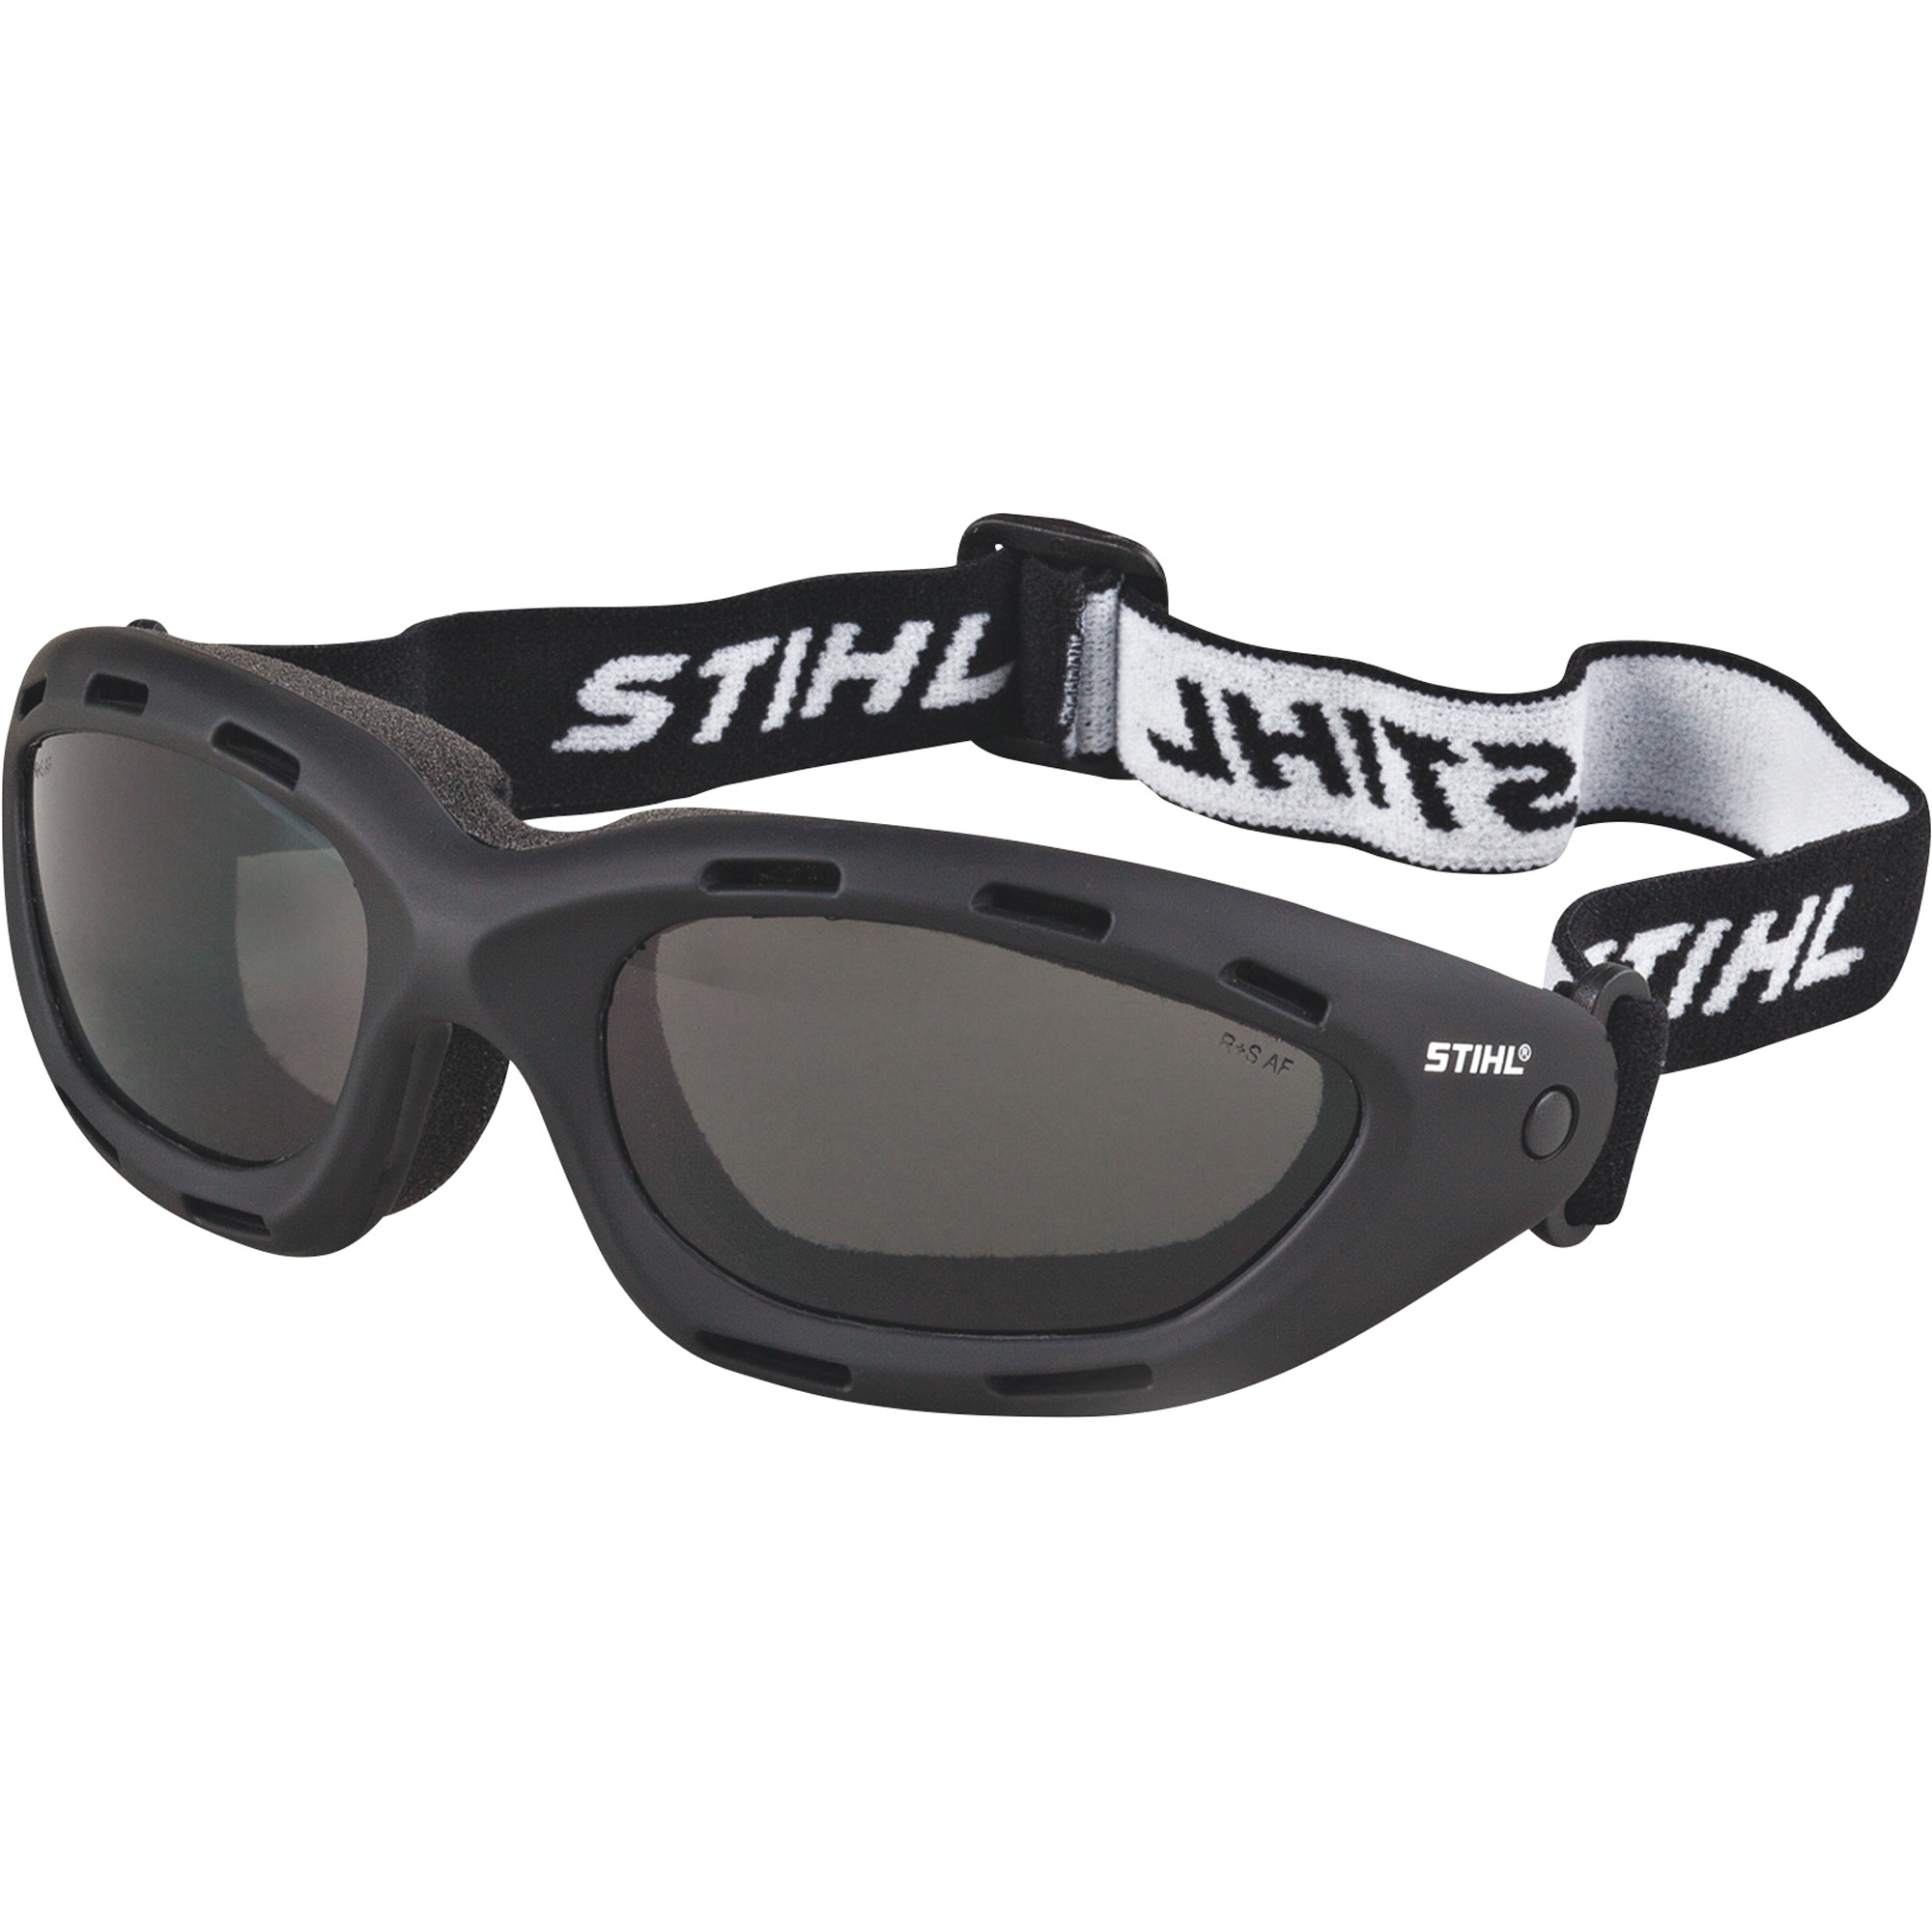 STIHL Pro Mark Series Safety Googles, Anti-Fog Lens, Smoke Foam Frame, Model 7010 884 0363